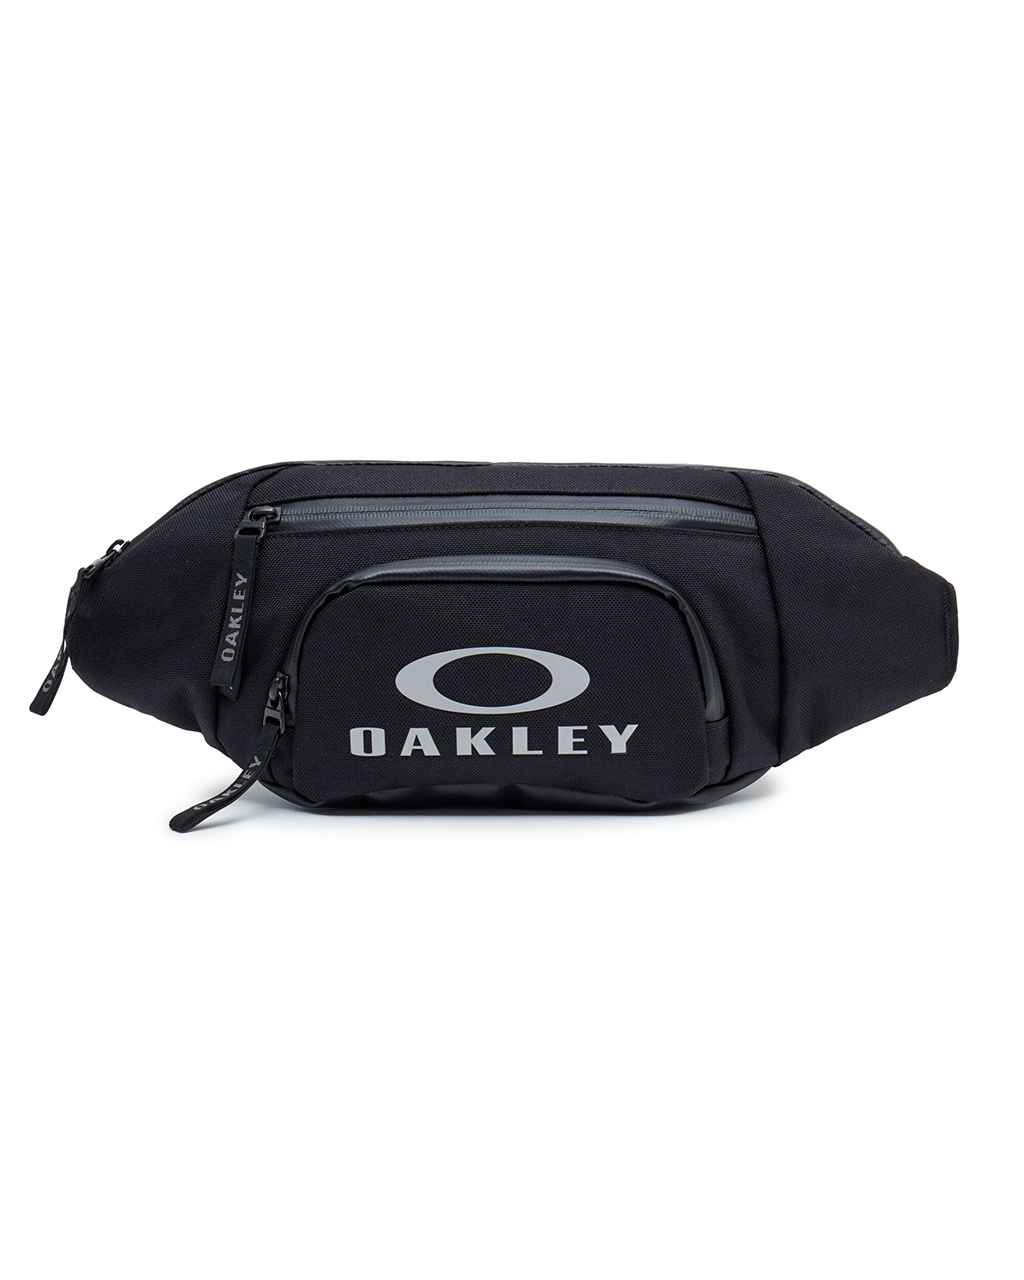 oakley snowboard bag